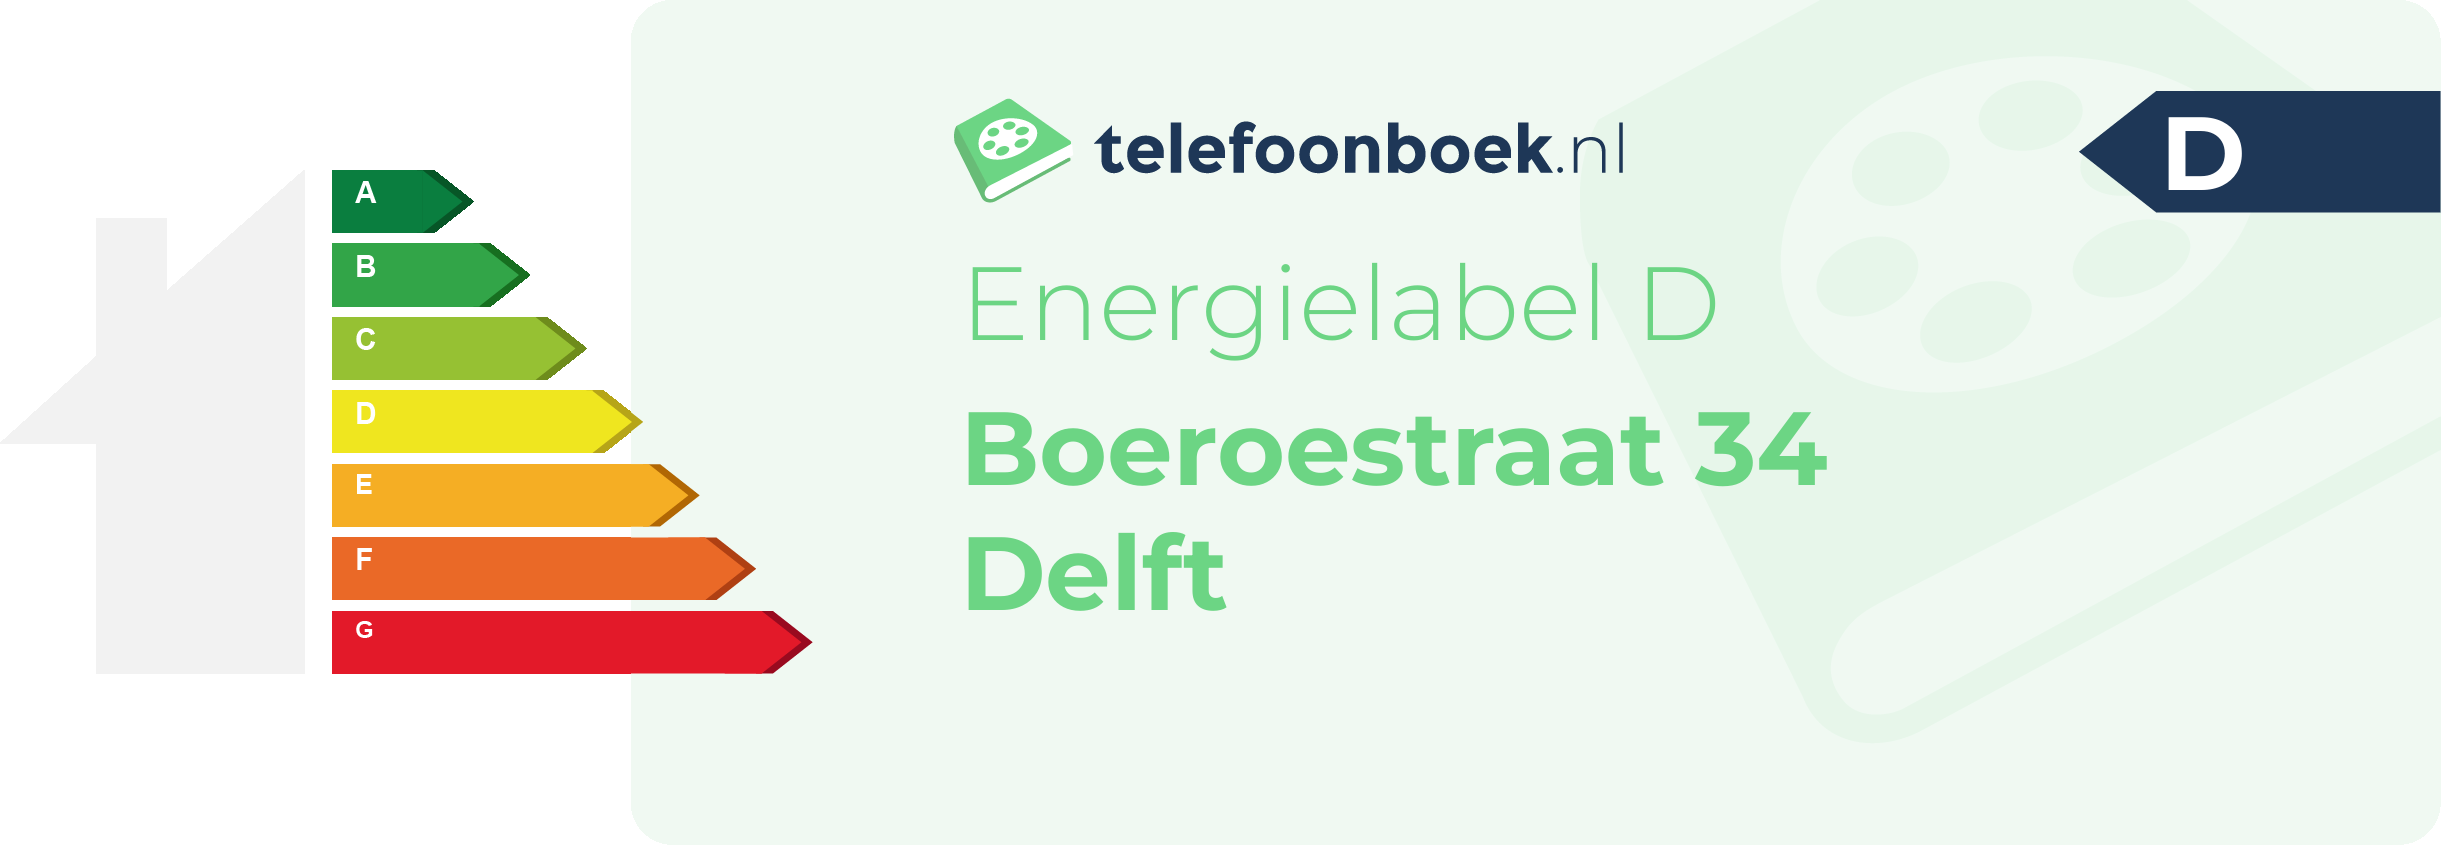 Energielabel Boeroestraat 34 Delft